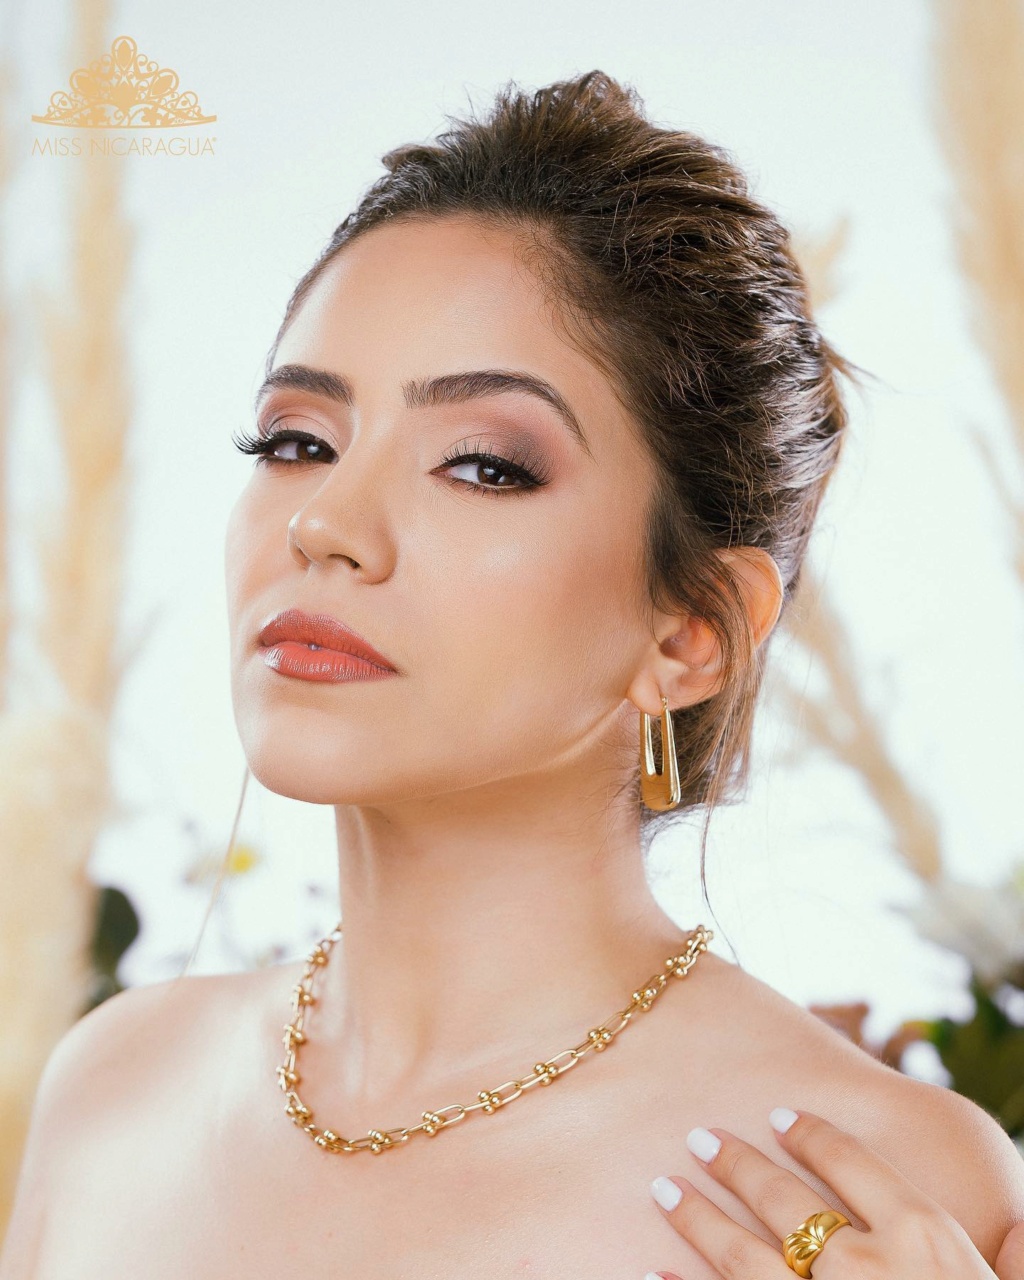 Miss Nicaragua 2022 28900810